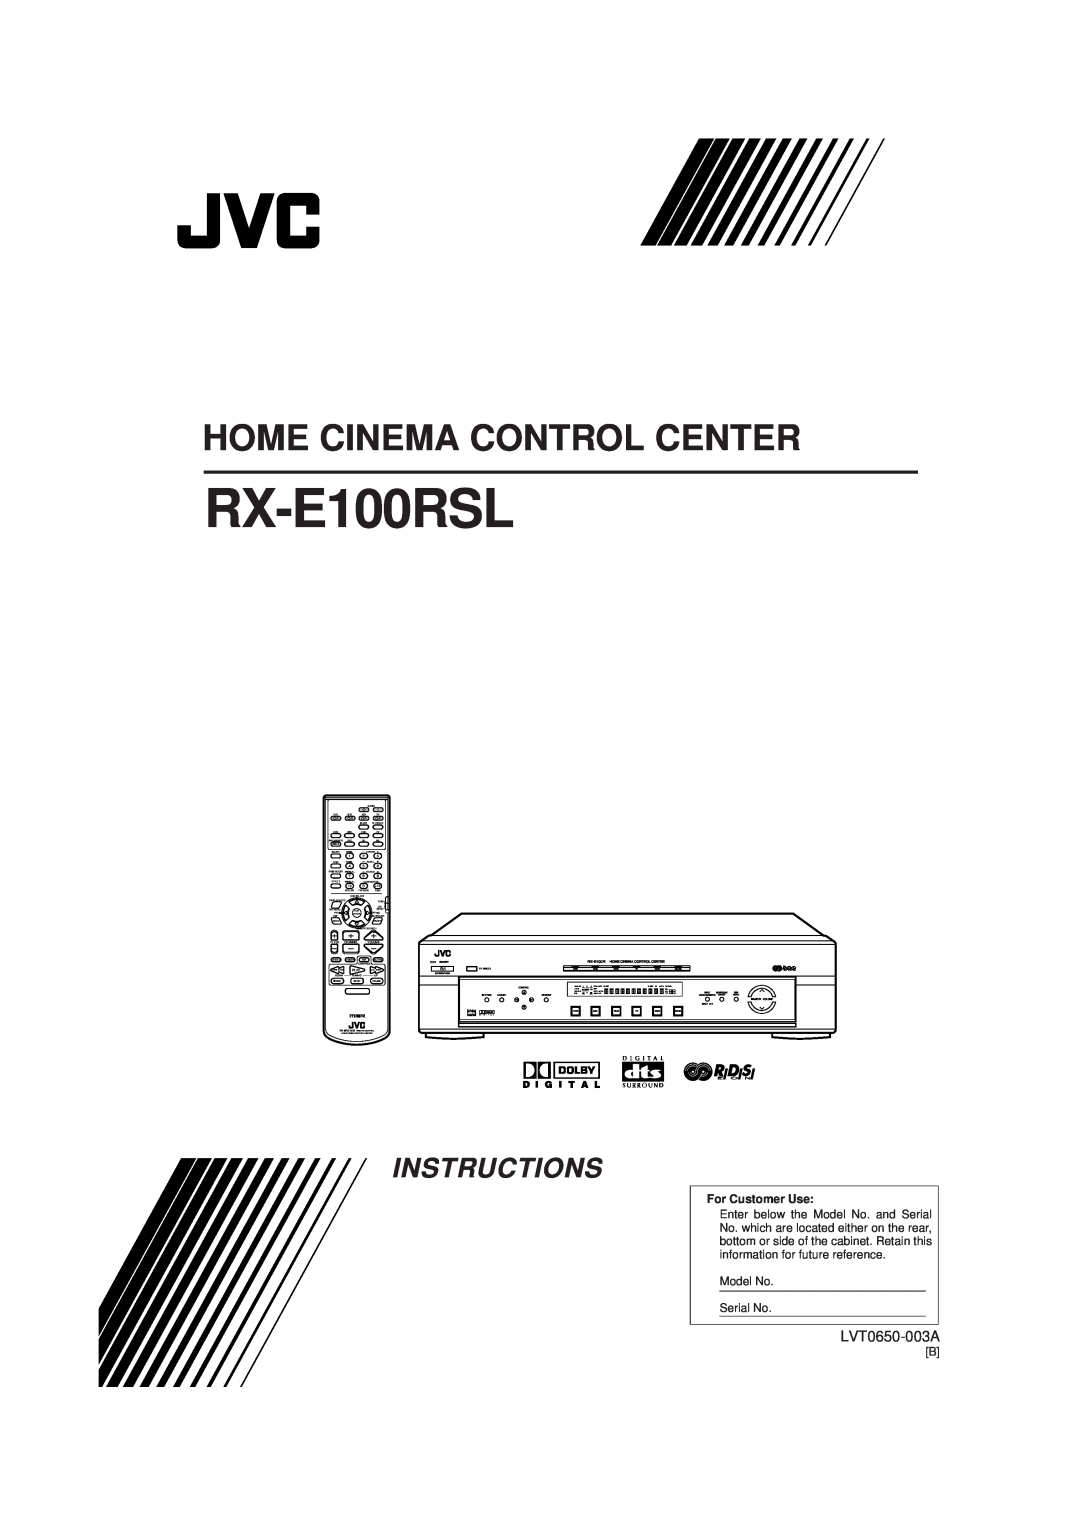 JVC RX-E100RSL manual Home Cinema Control Center, Instructions, LVT0650-003A 